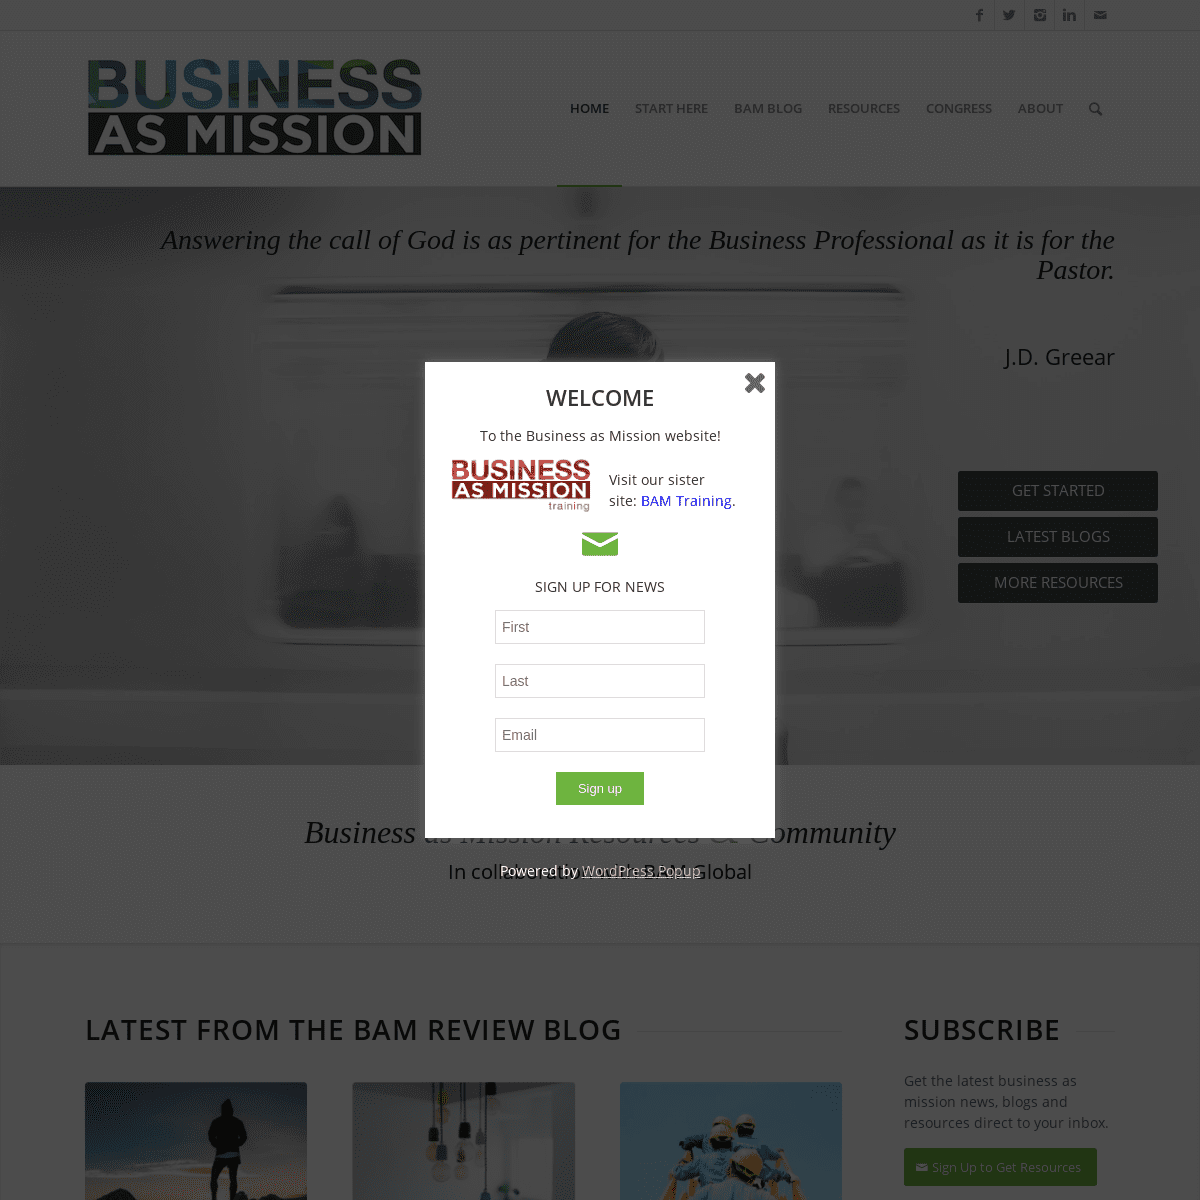 A complete backup of businessasmission.com